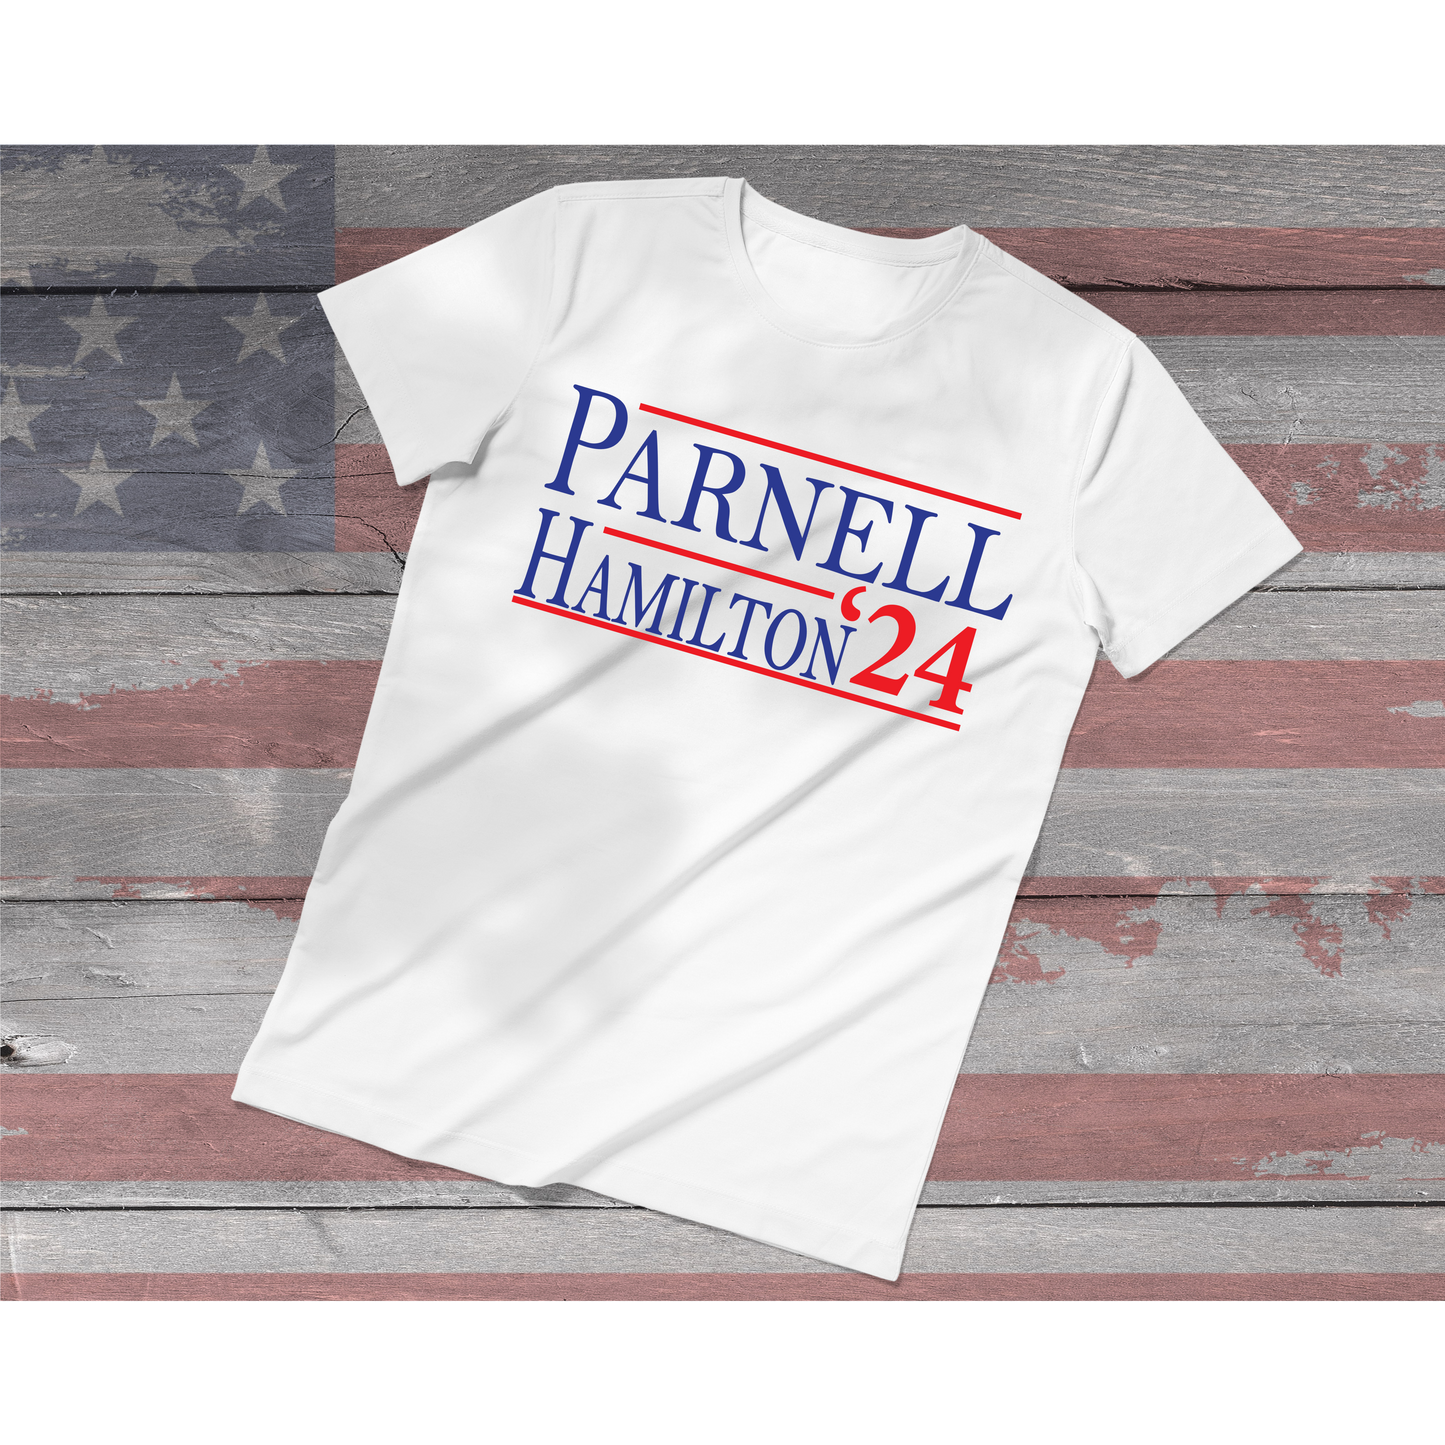 Parnell/Hamilton '24